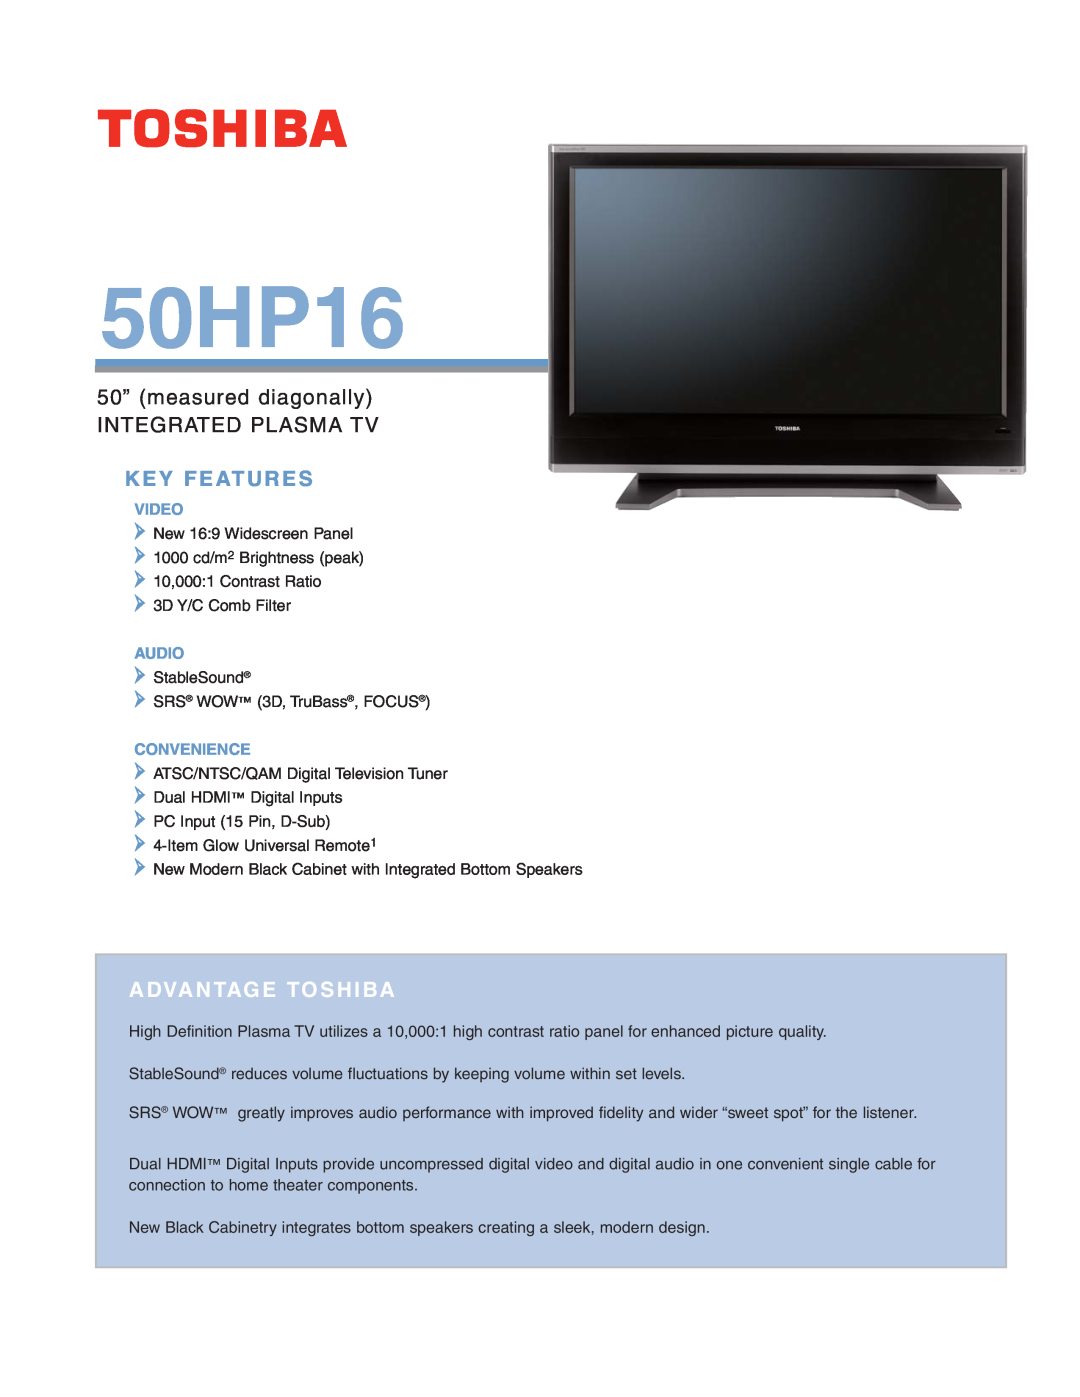 Toshiba 50HP16 manual Key Features, 50” measured diagonally INTEGRATED PLASMA TV, Advantage Toshiba, Video, Audio 